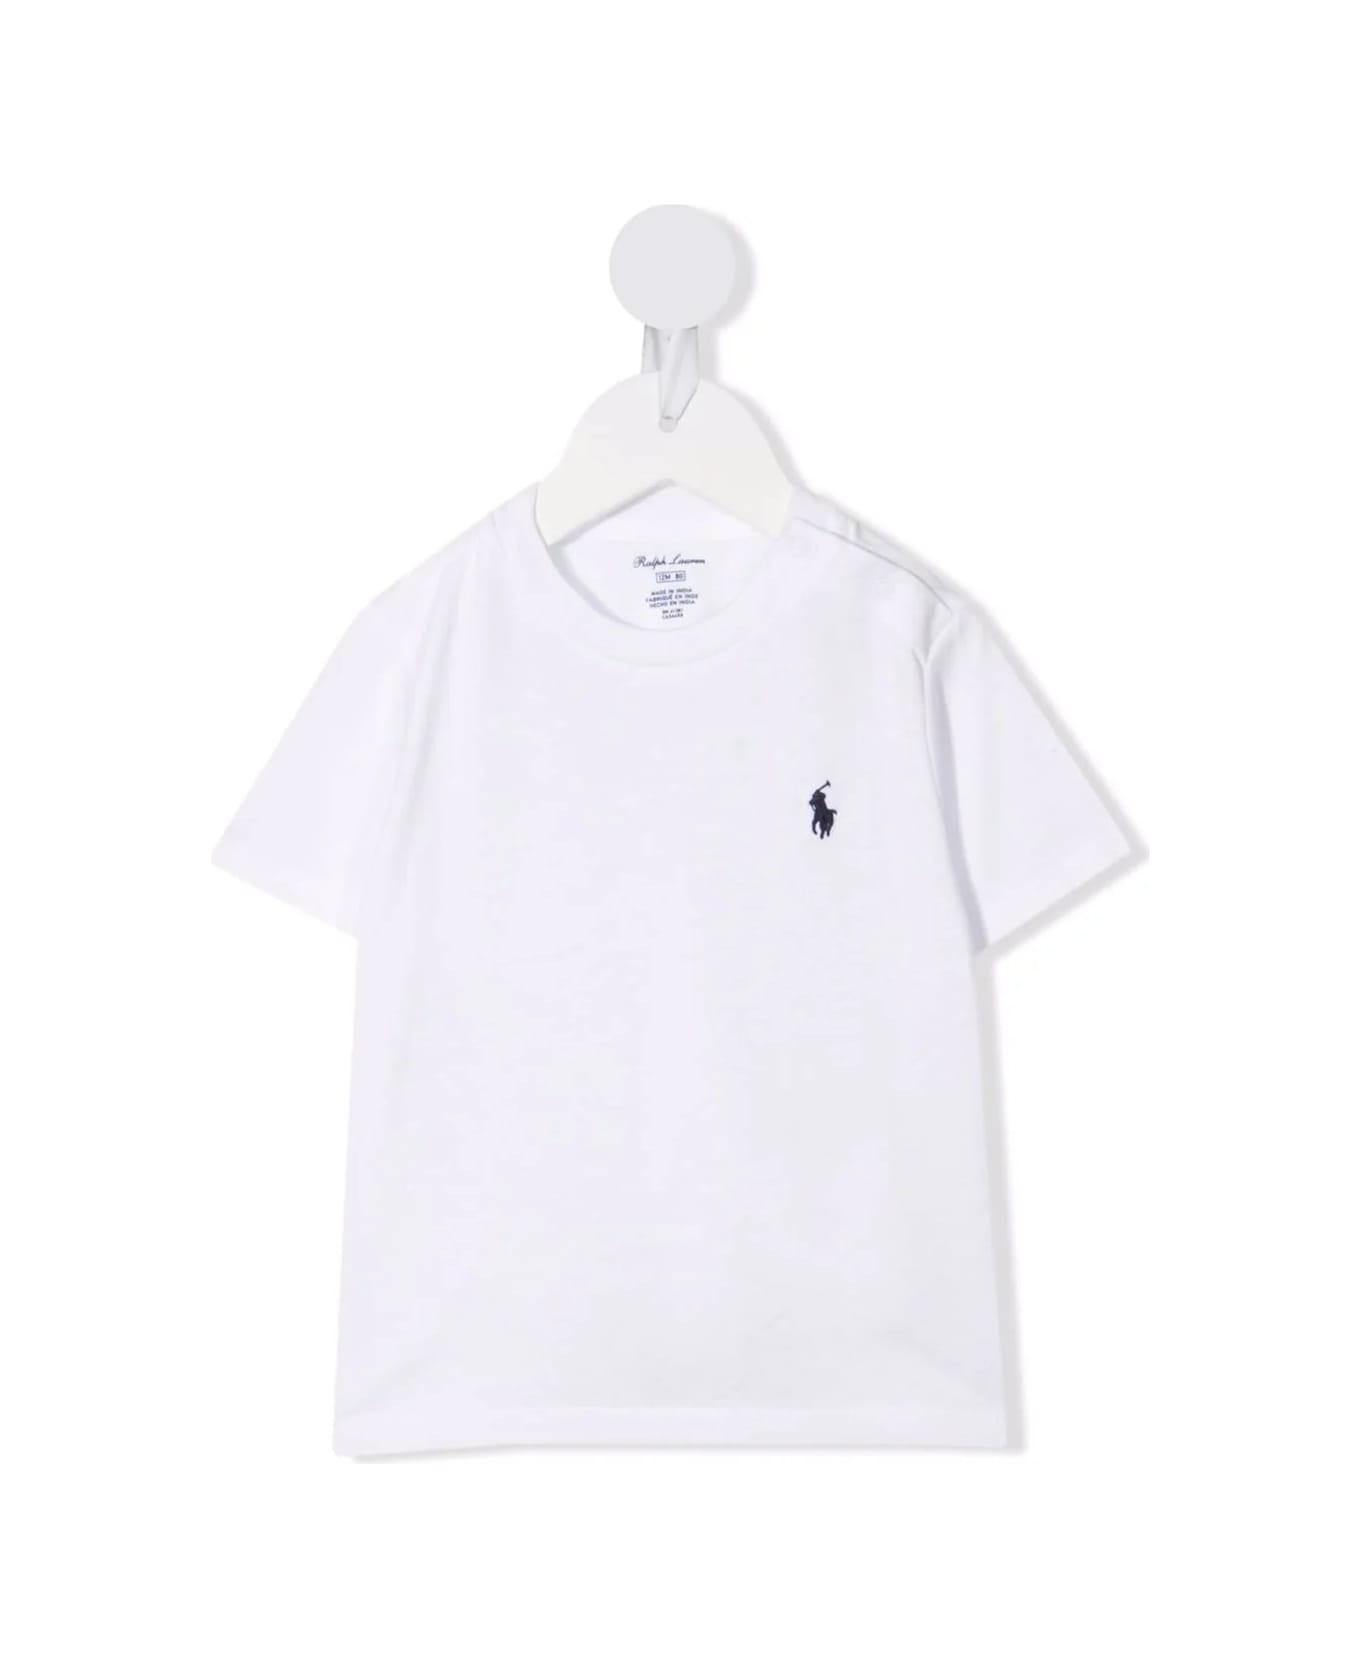 Ralph Lauren Baby White T-shirt With Navy Blue Pony